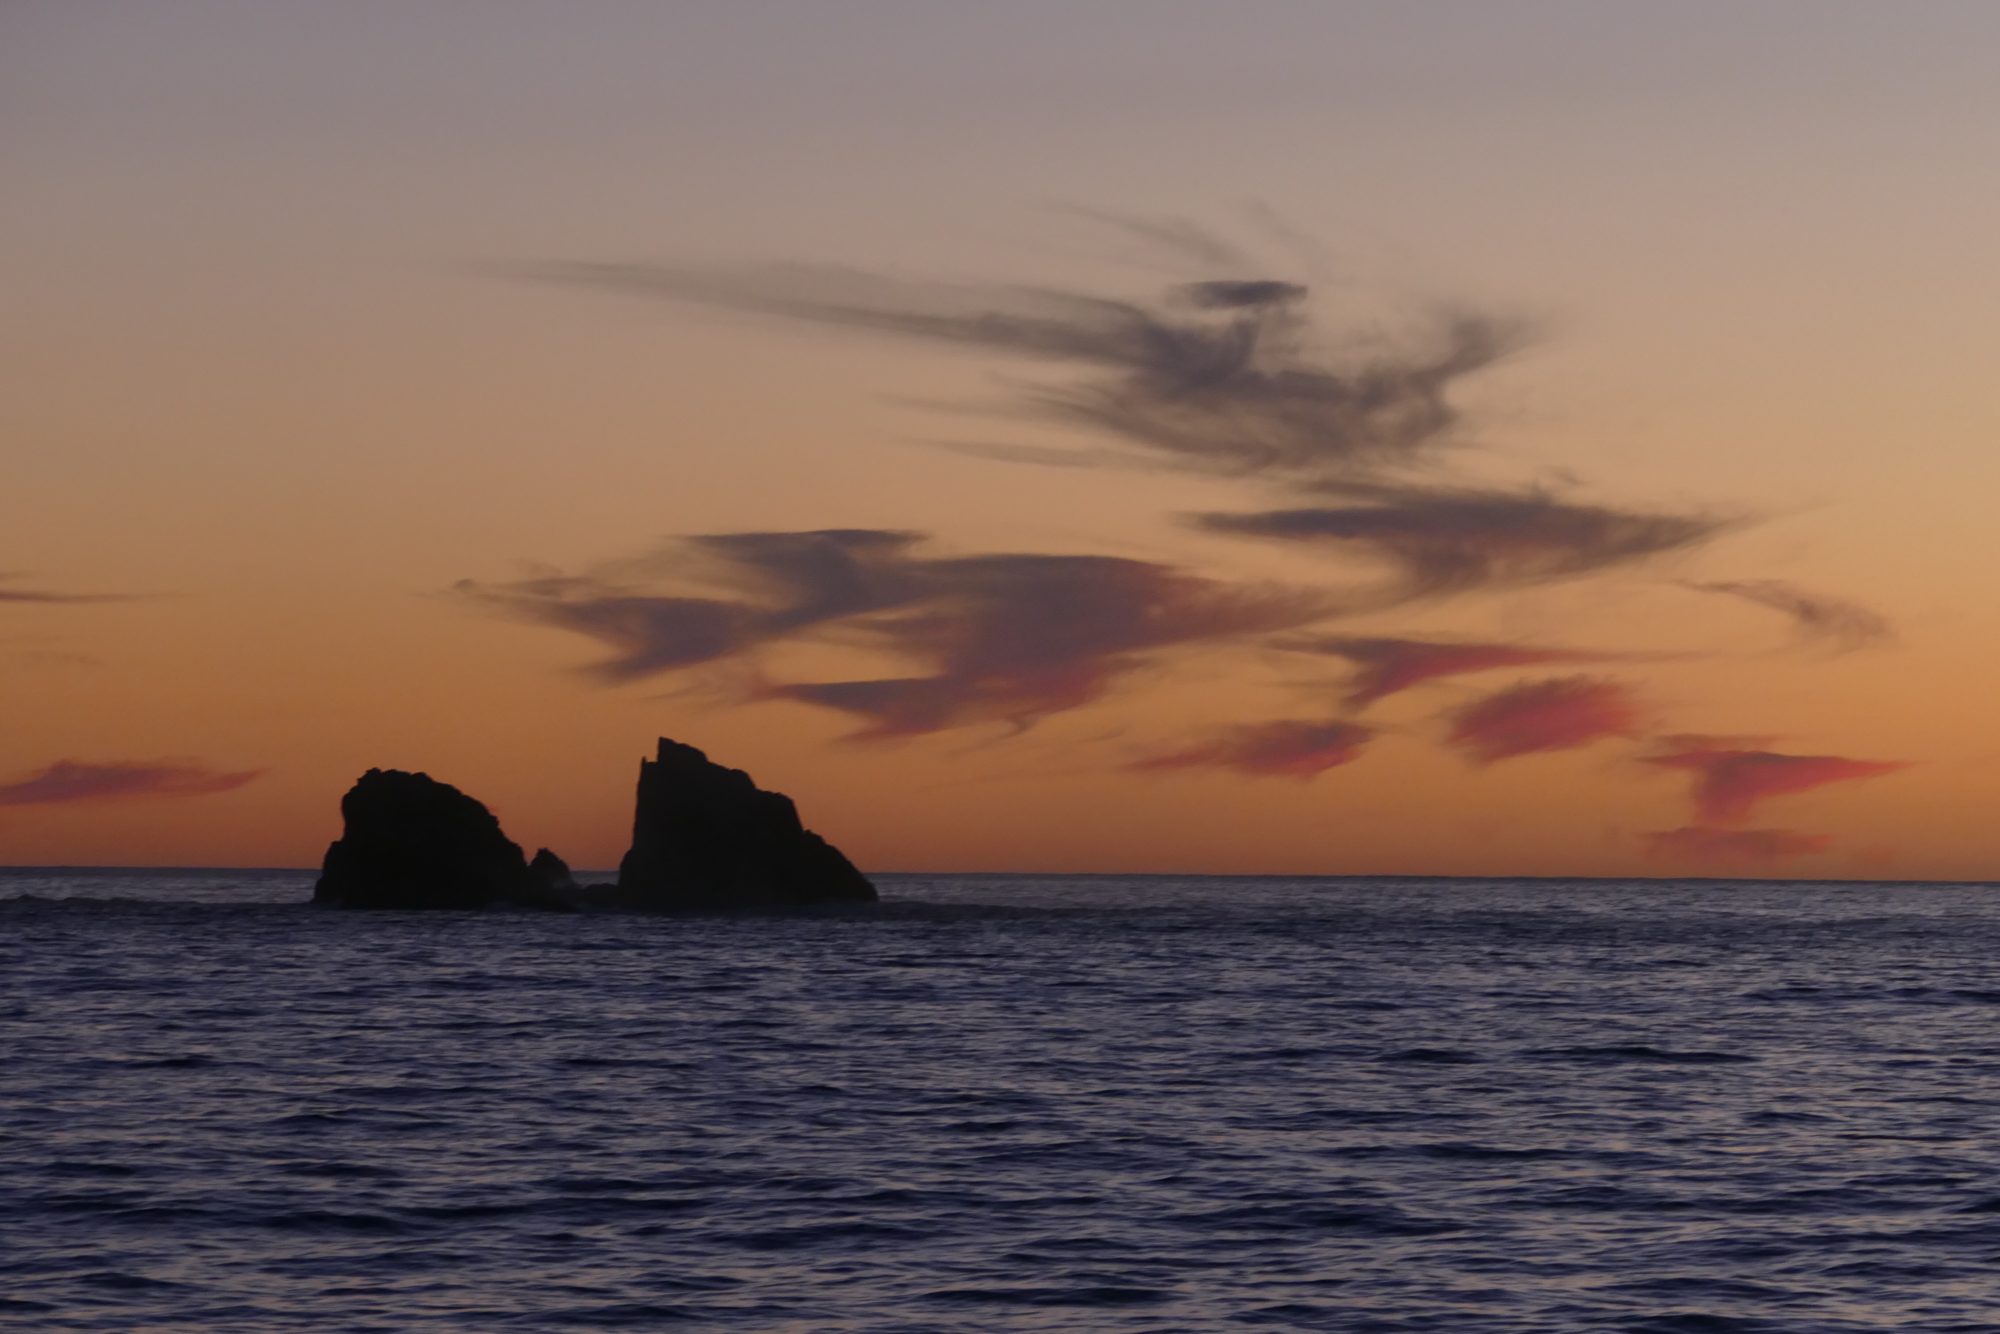 Ocean-proper, exceptionally calm at dusk on April 22, 2015. All photos copyright Doug Spencer.